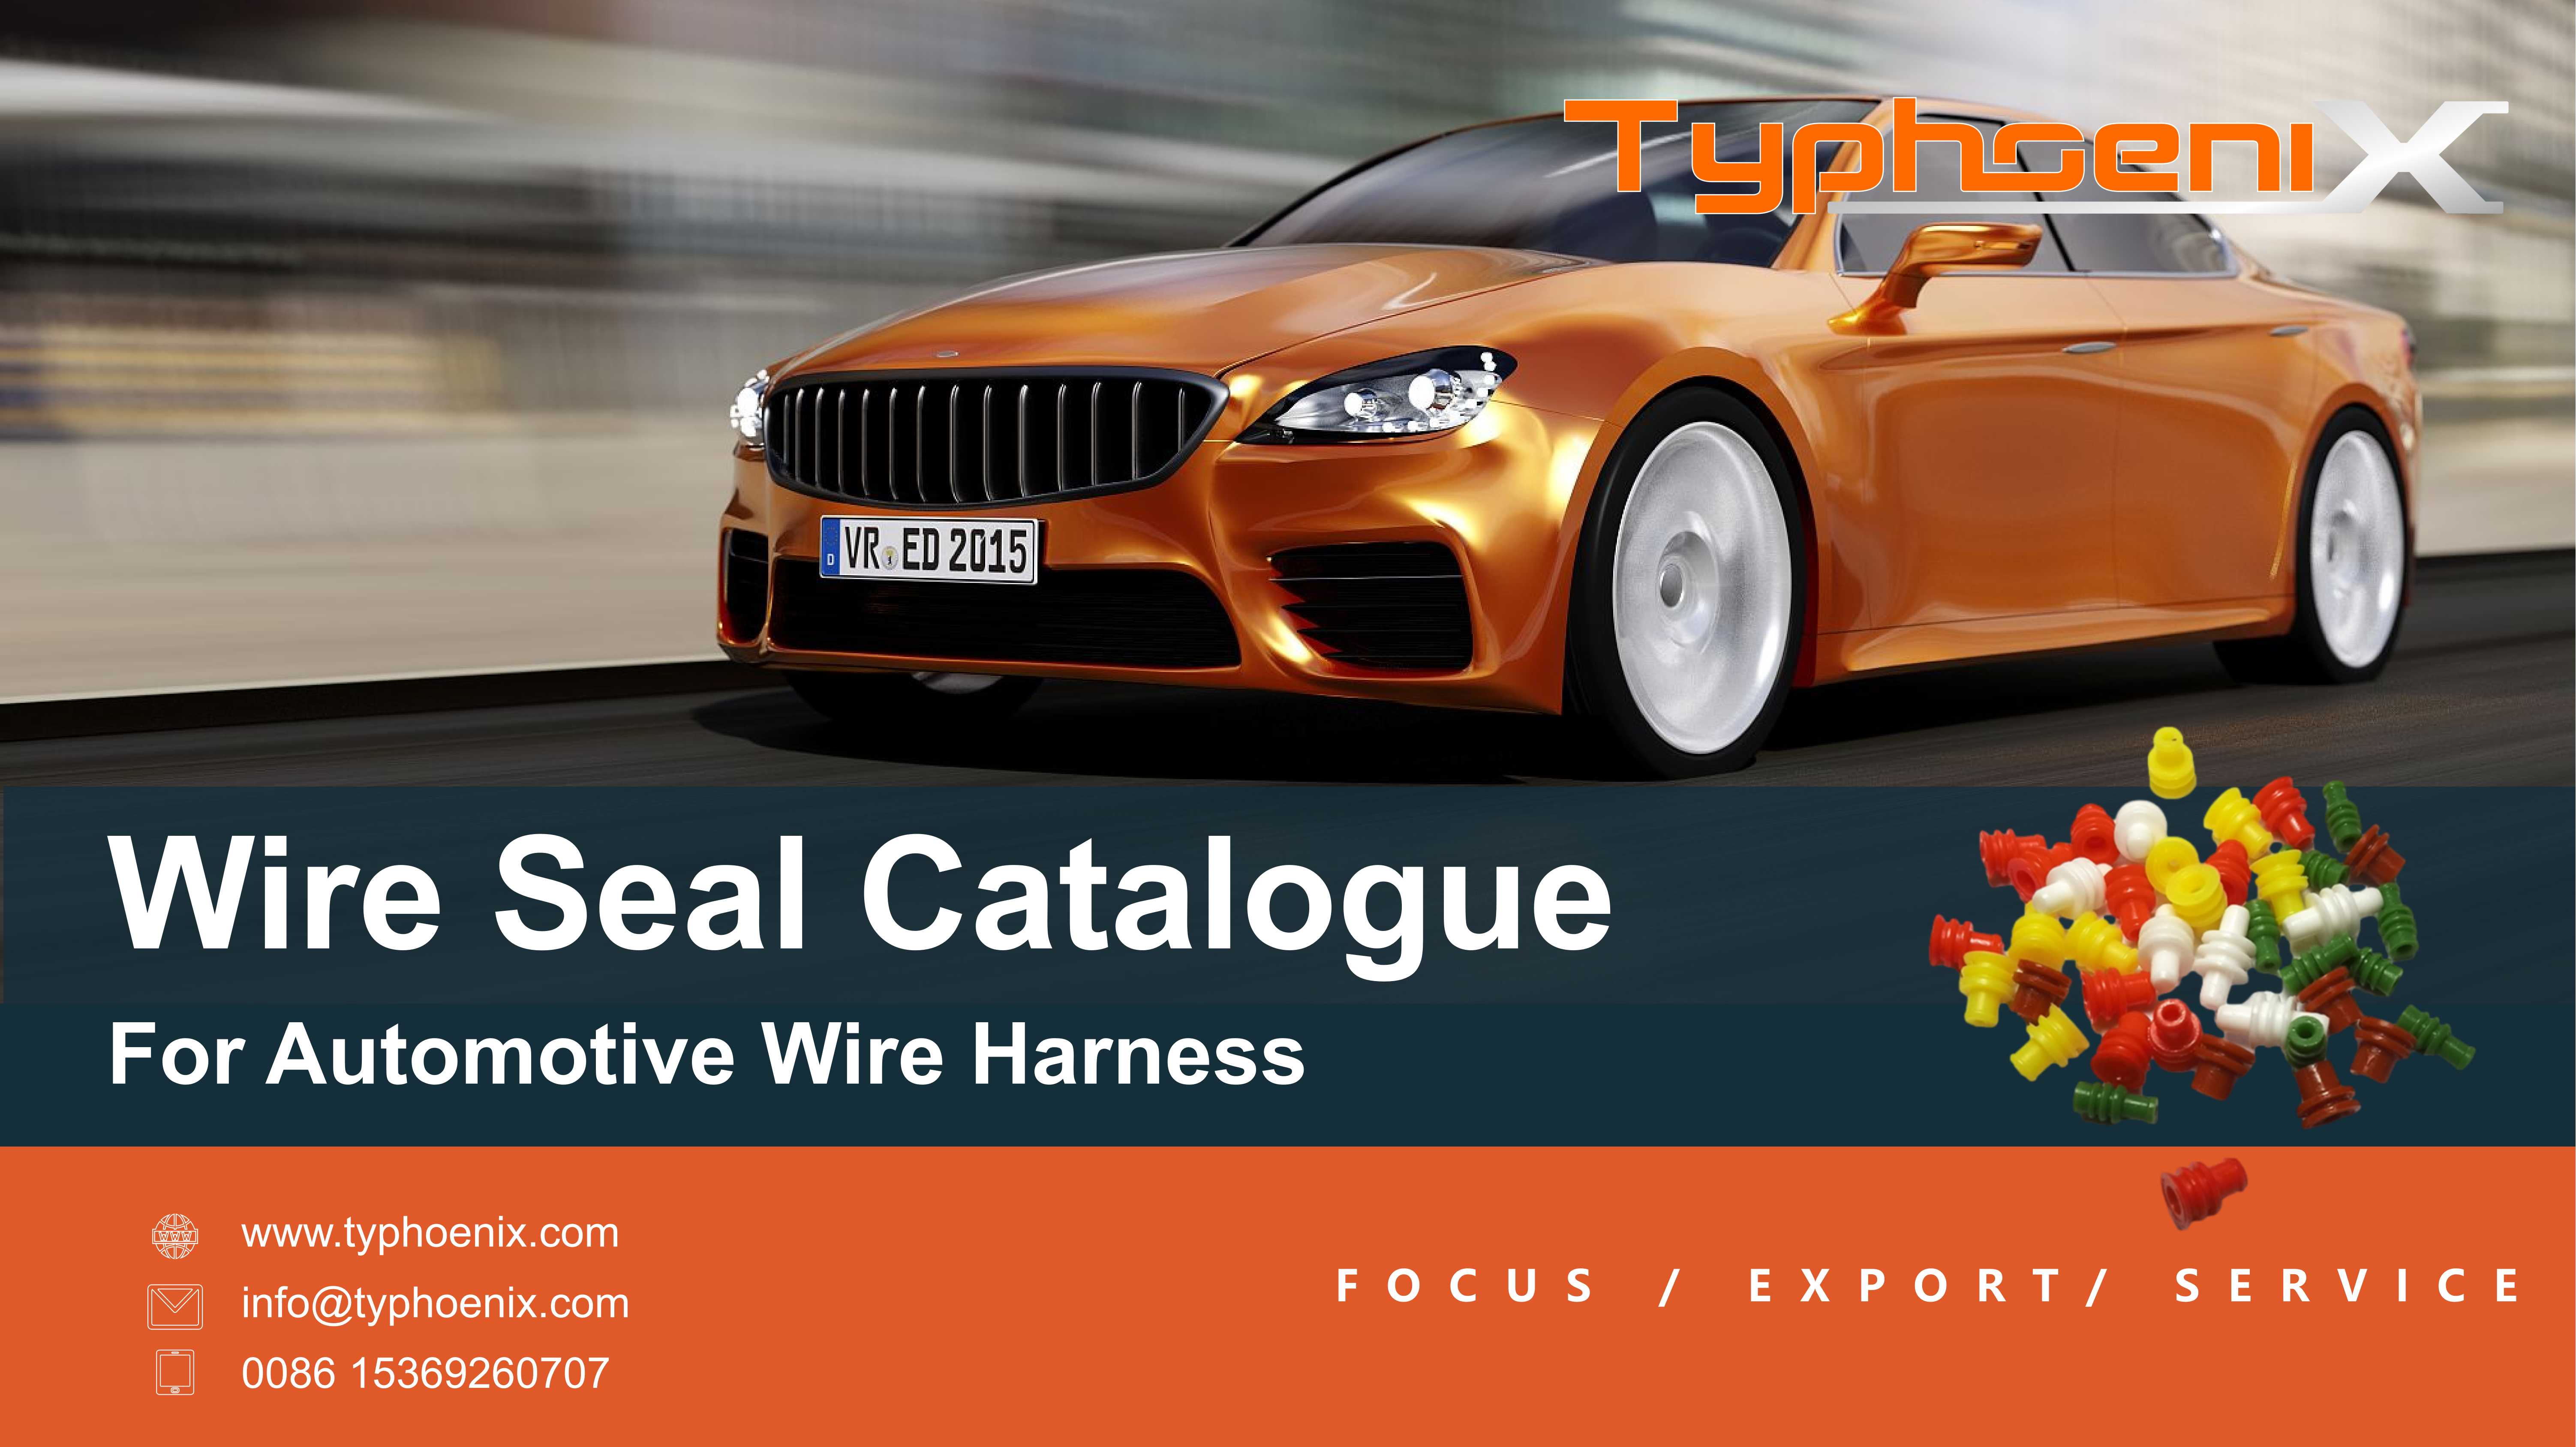 Typhoenix Catalogue_Wire Seal